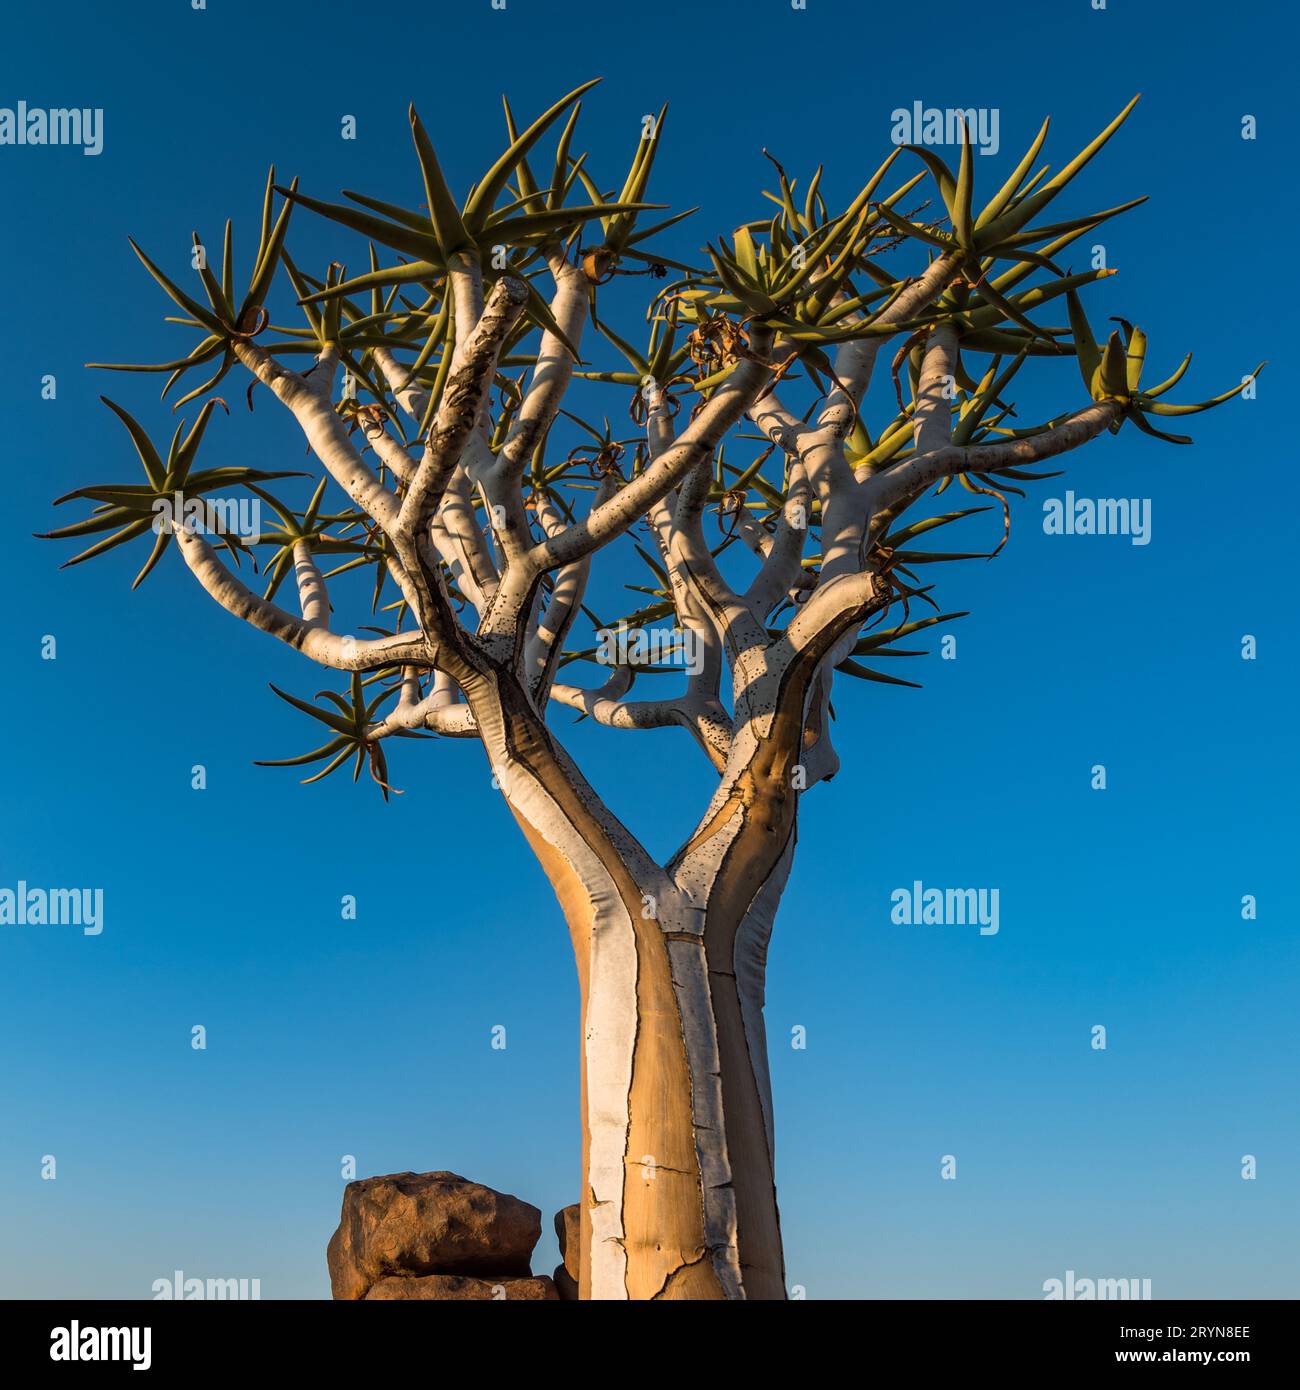 The quiver tree, or aloe dichotoma, Keetmanshoop, Namibia Stock Photo